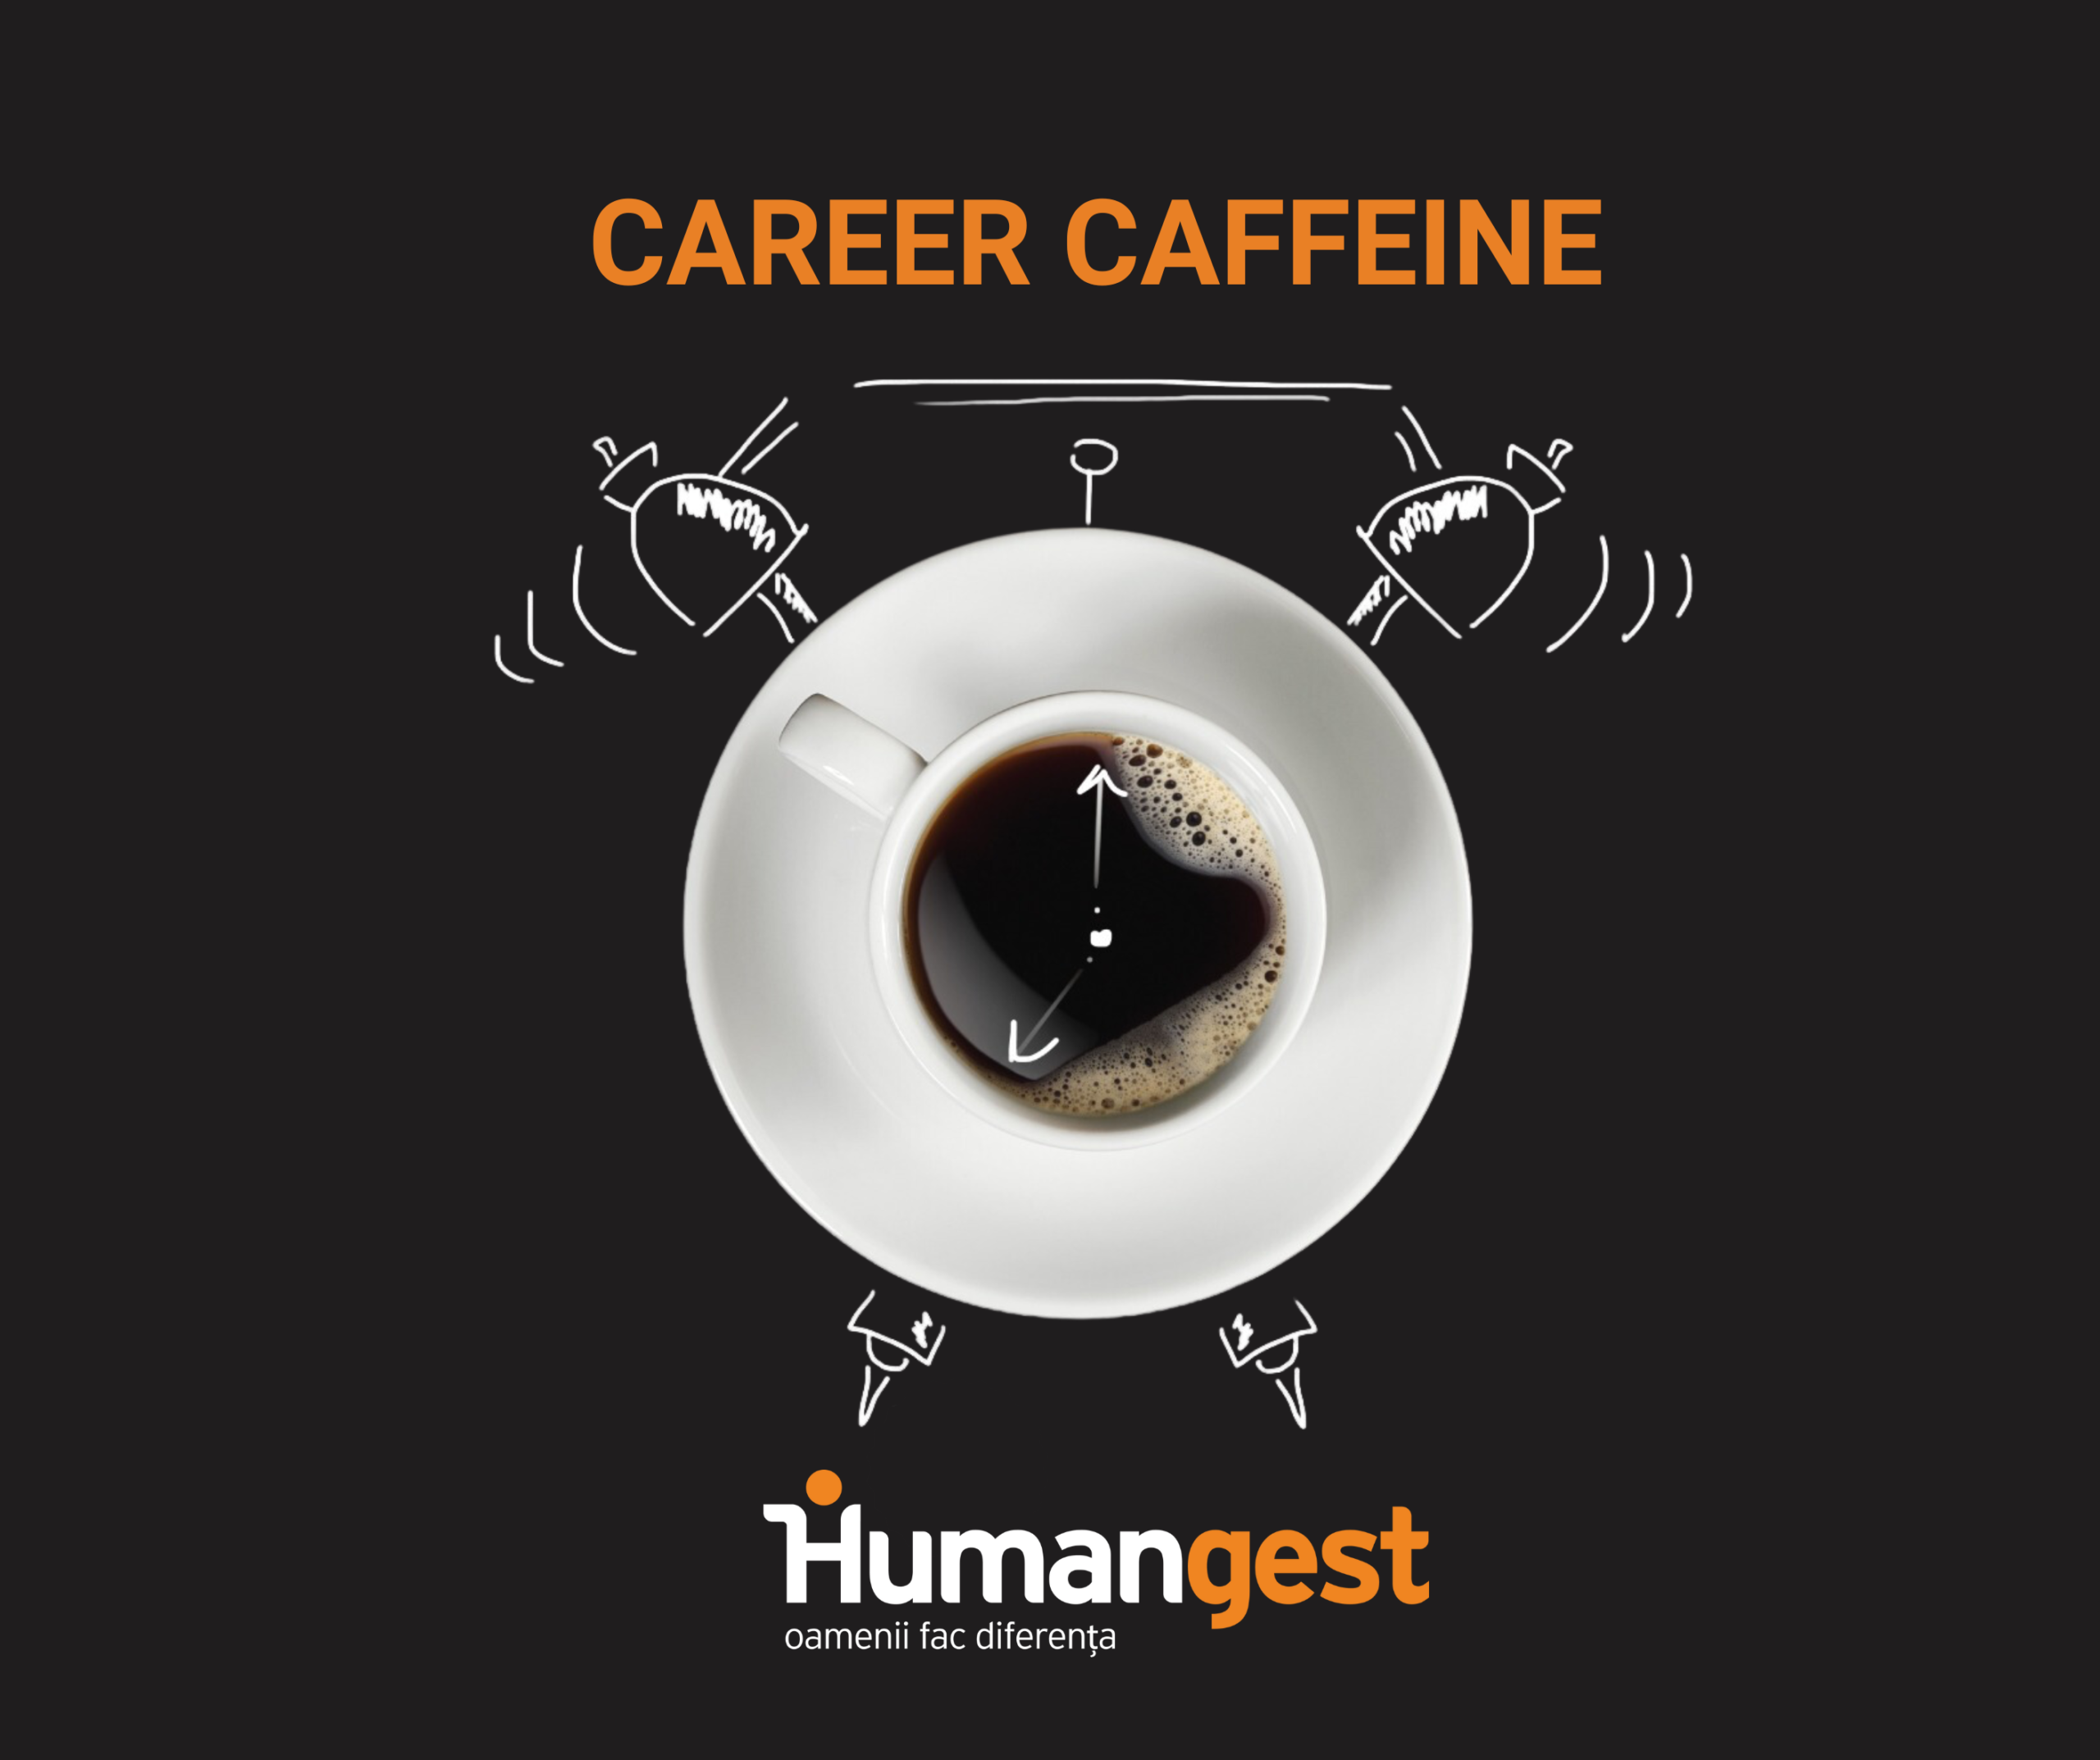 Career Caffeine